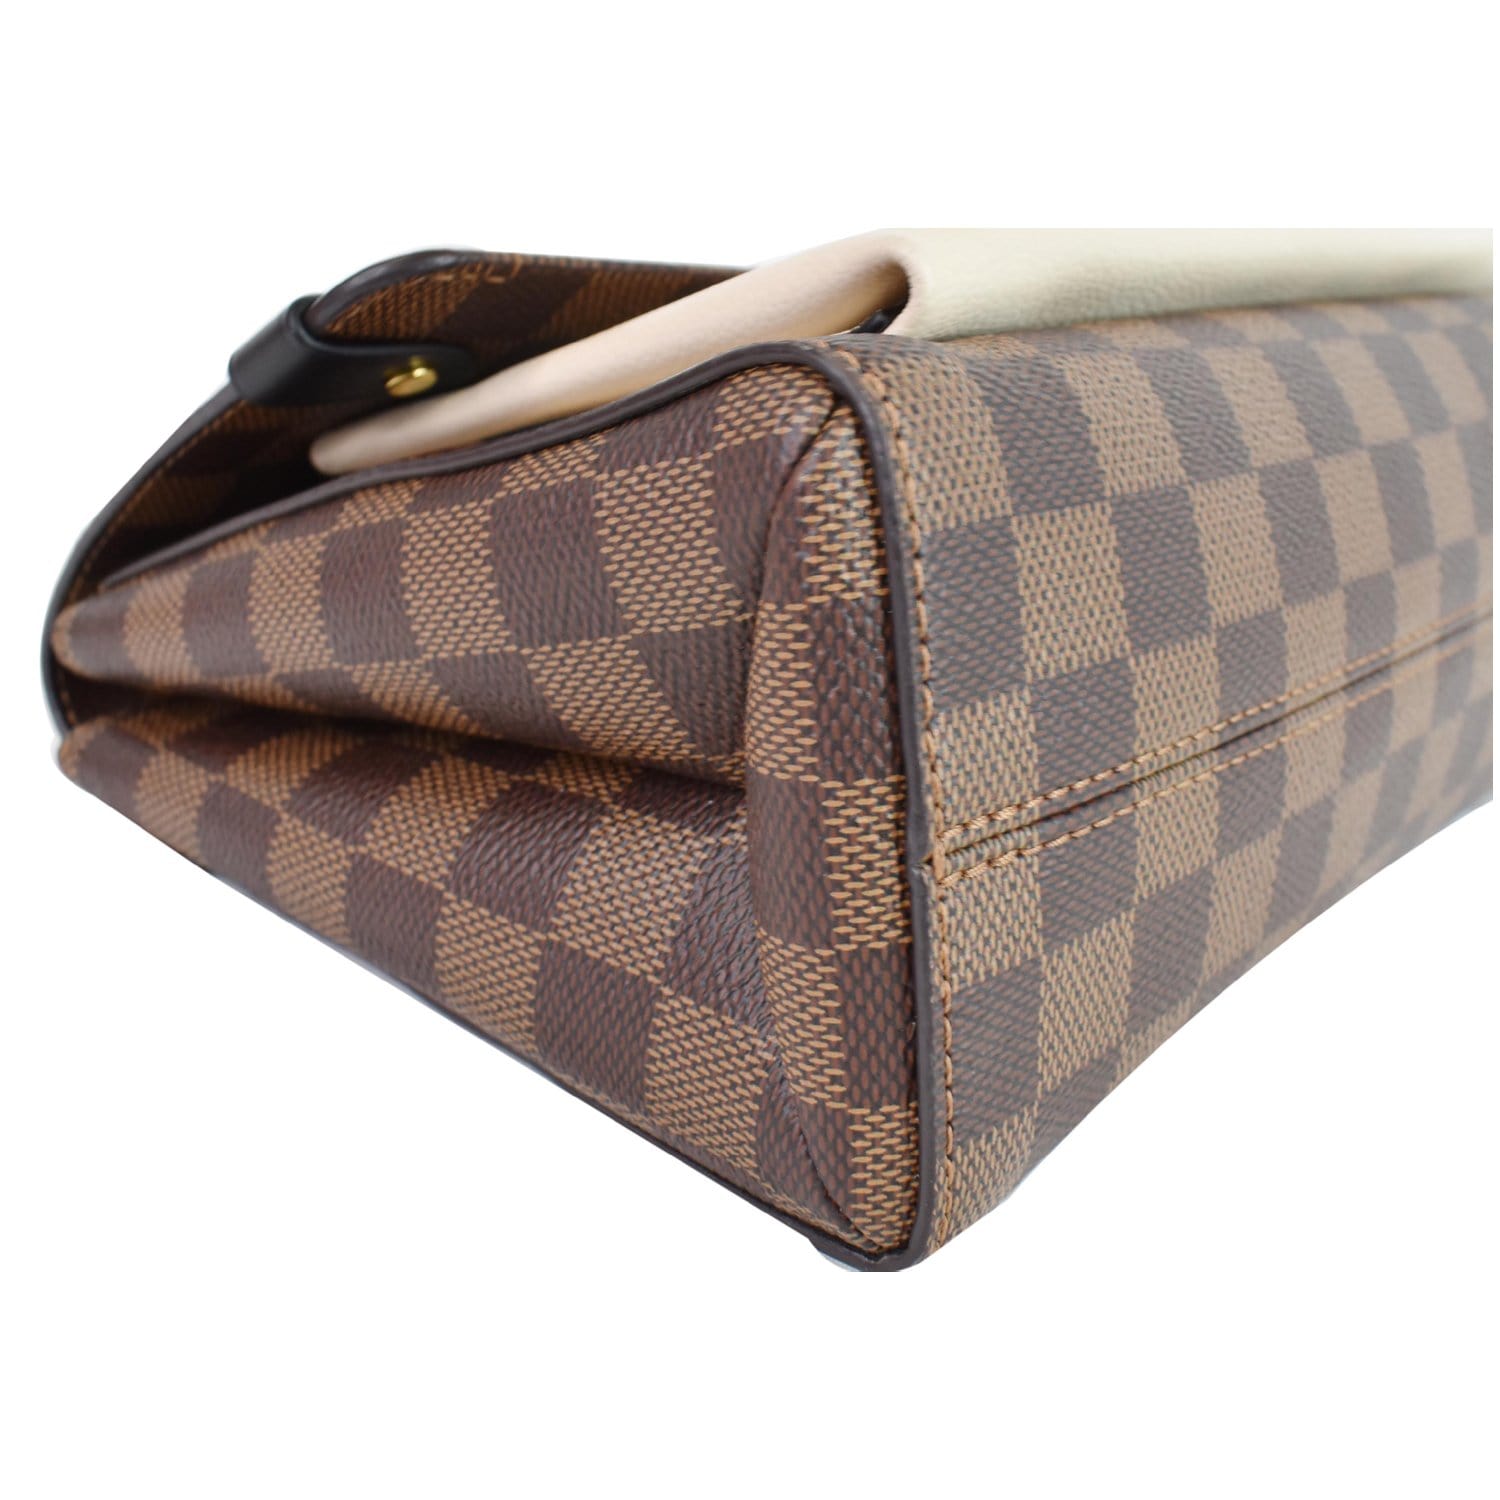 Handbags Louis Vuitton Louis Vuitton Vavin PM Tote in Brown Print Leather